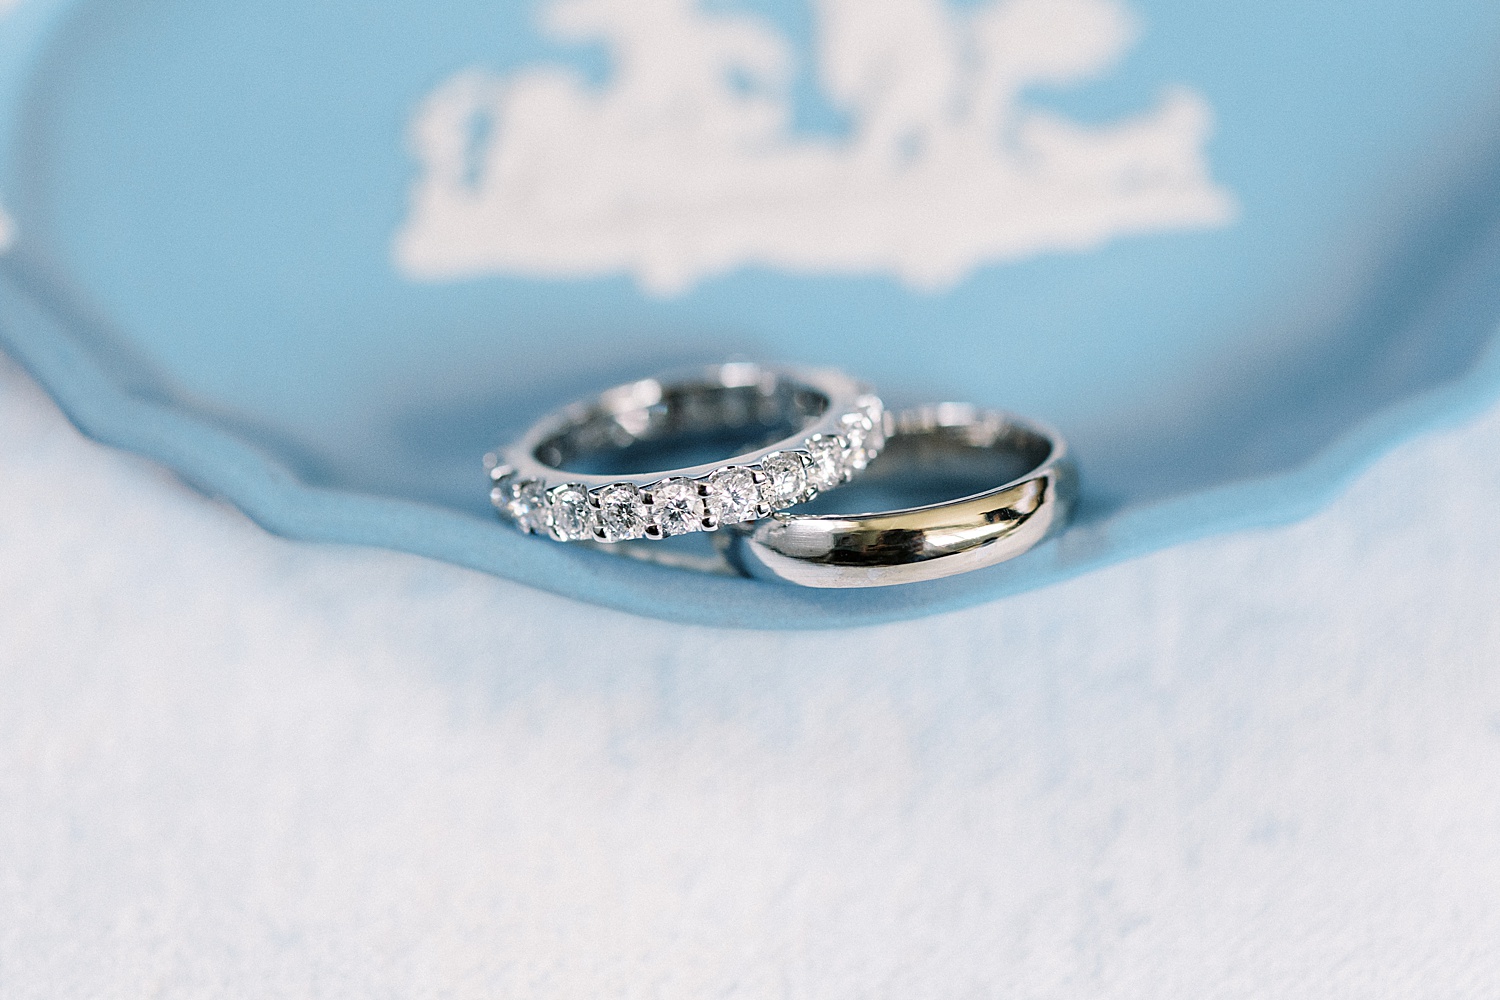 Diamond rings on blue dish by Massachusetts wedding photographer